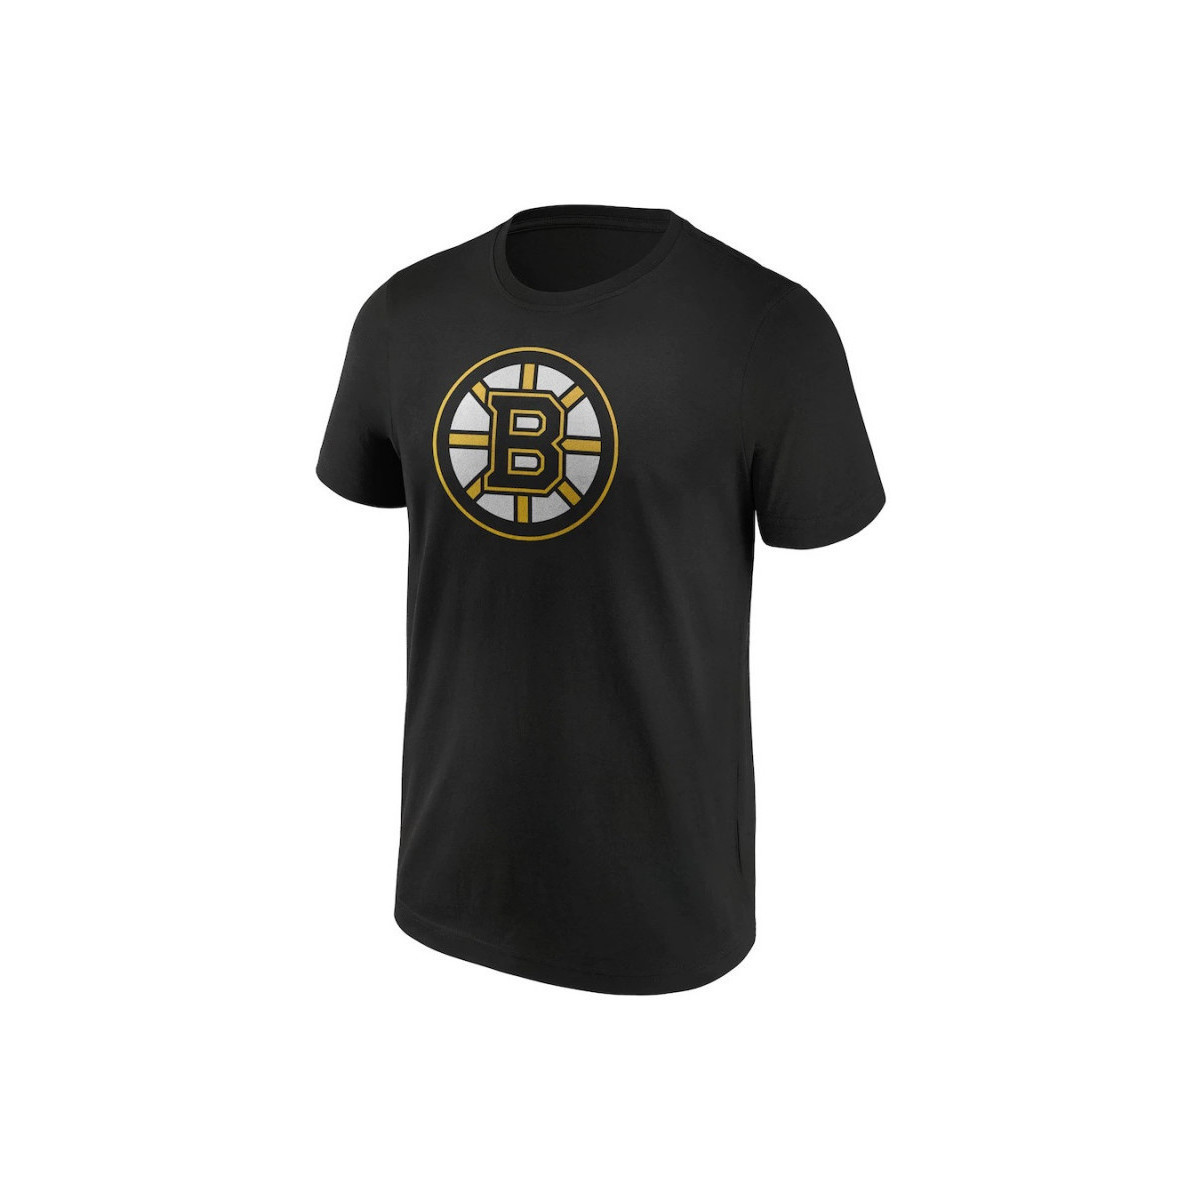 Vêtements T-shirts manches courtes Fanatics T-shirt NHL Boston Bruins Fana Multicolore